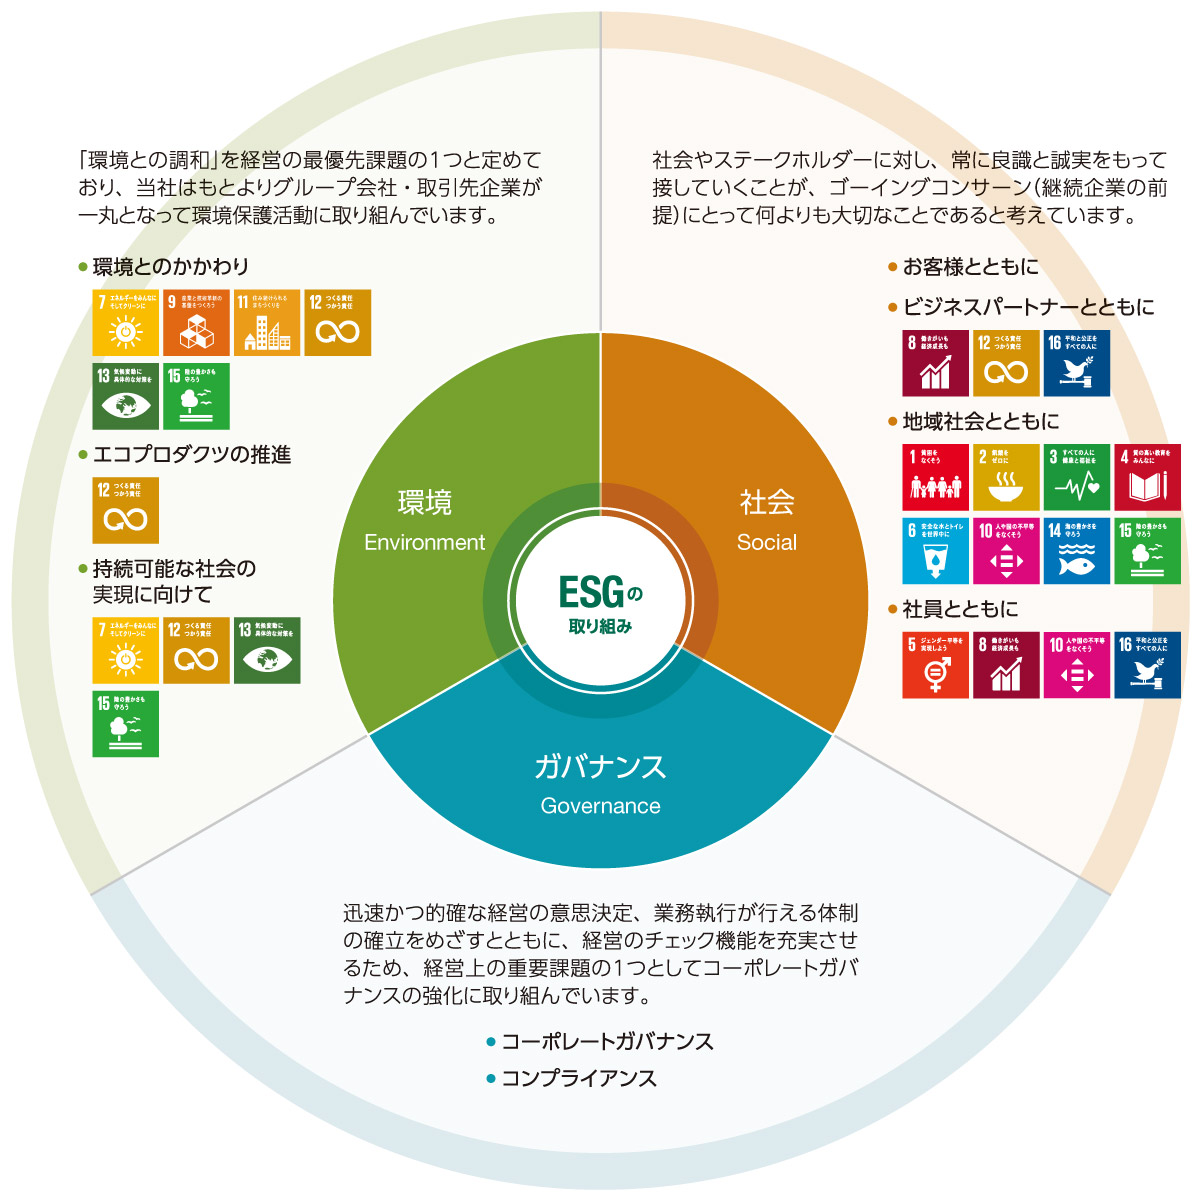 ESG（環境/社会/ガバナンス）概念図。環境（Environment）：「環境との調和」を経営の最優先課題の一つと定めており、当社はもとよりグループ会社・取引先企業が一丸となって環境保護活動に取り組んでいます。社会（Social）：社会やステークスホルダーに対し、常に良識と誠実をもって接していくことが。ゴーイングコンサーン（継続企業の前提）にとって何よりも大切なことであると考えています。ガバナンス（Governance）：迅速かつ的確な経営の意思決定、業務執行が行える体制の確立をめざすとともに、経営のチェック機能を充実させるため、経営上の重要課題の1つとしてコーポレートガバナンスの強化に取り組んでいます。